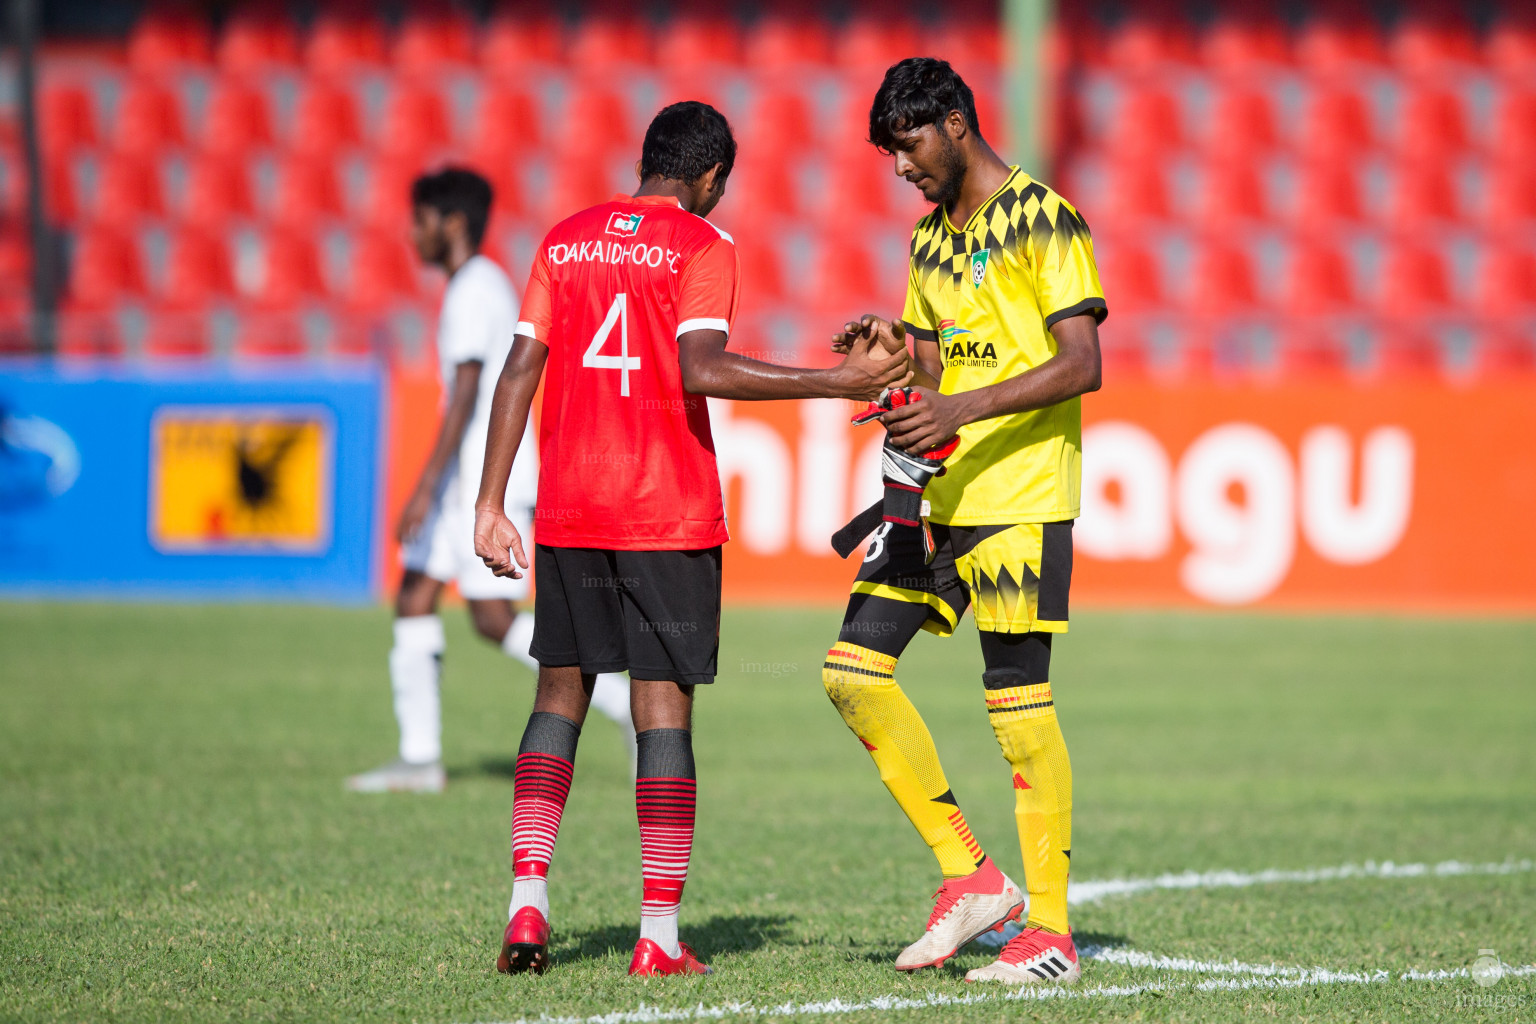 FAM Youth Championship 2019 - TC sports club vs Foakaidhoo in Male, Maldives, Monday February 4th, 2019. (Images.mv Photo/Suadh Abdul Sattar)